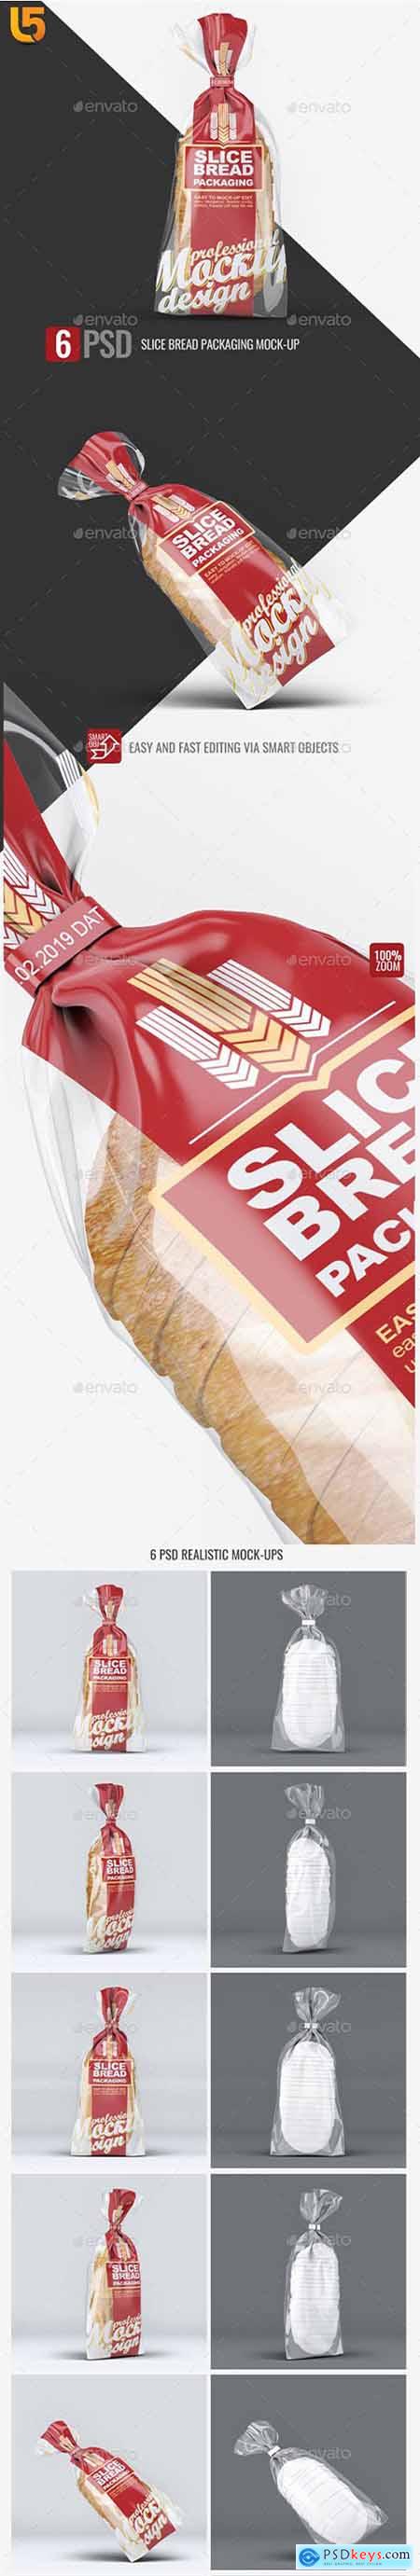 Download Graphicriver Slice Bread Packaging Mock-Up 23293889